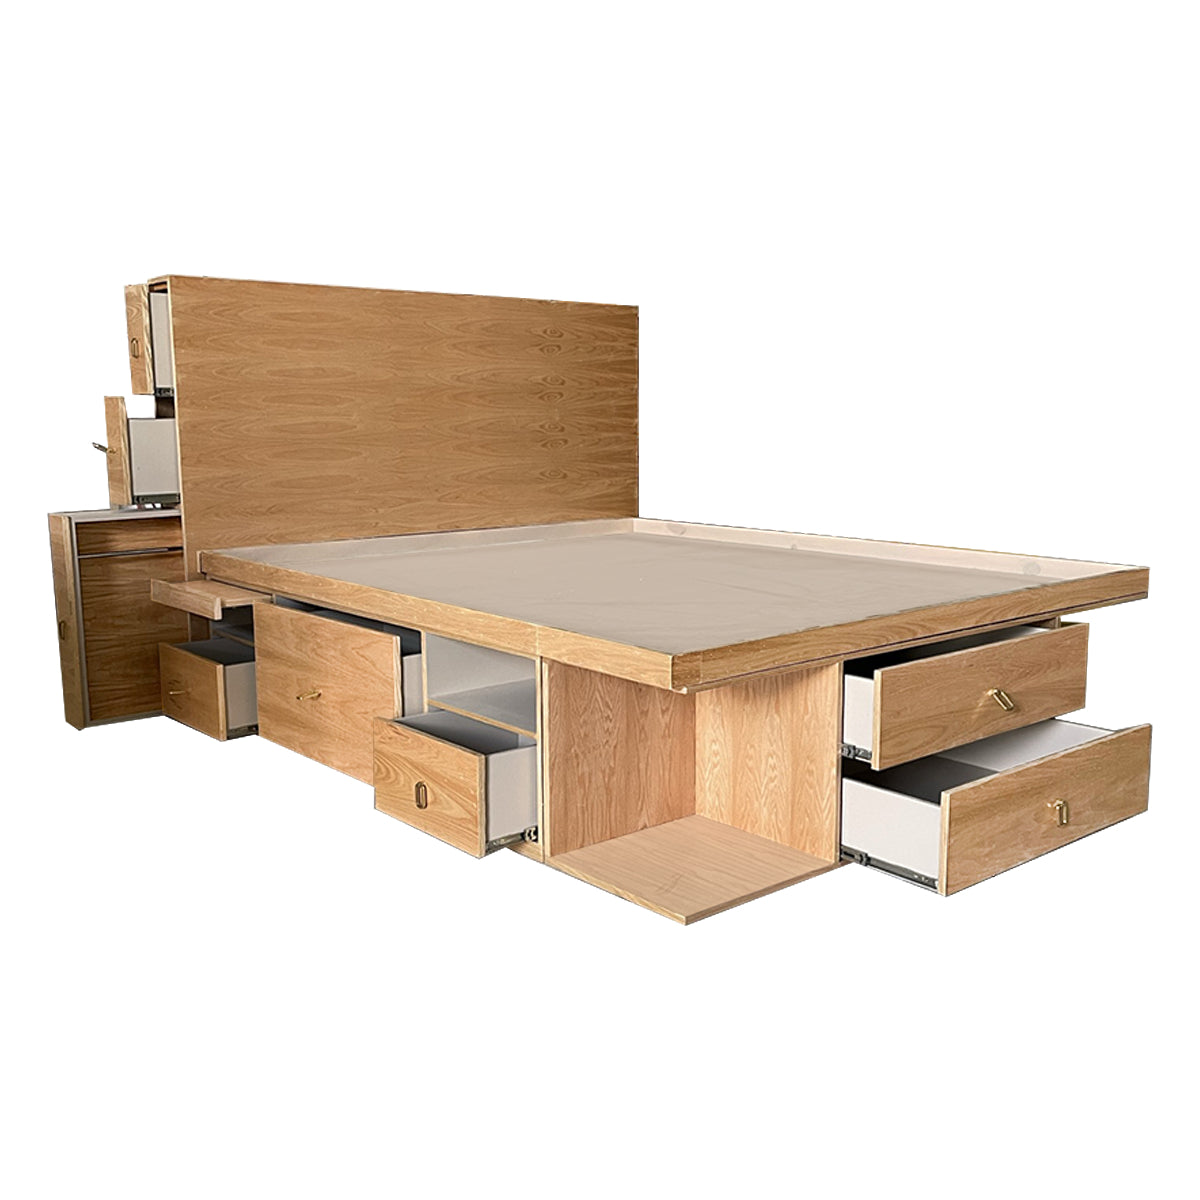 Base de cama con cajones Oslo  Wooden Box. – Wooden Box Mx